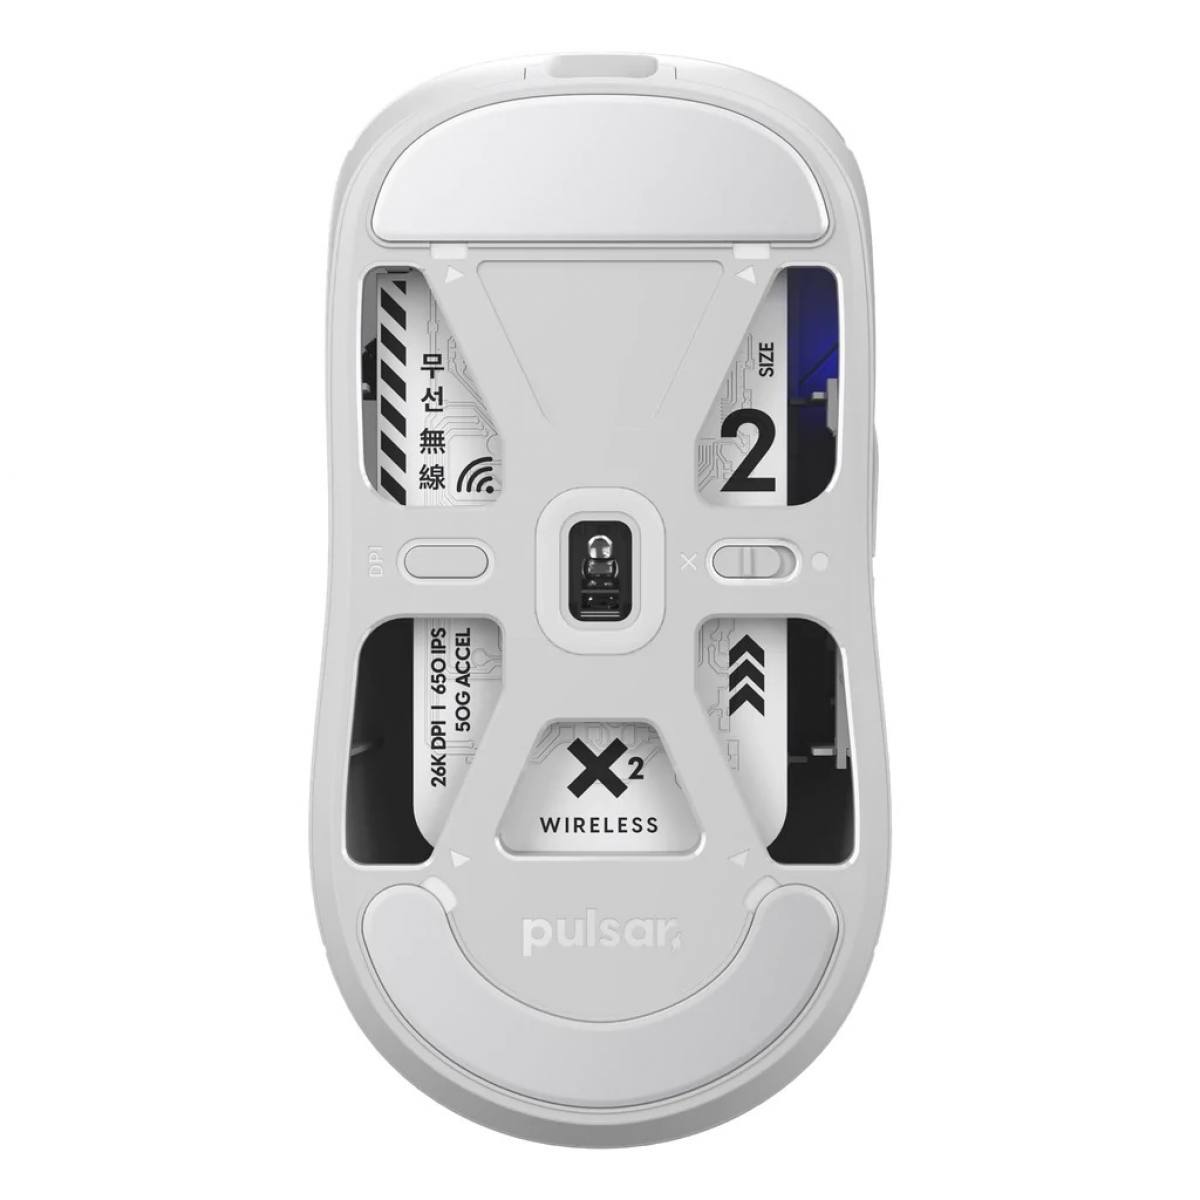 Chuột Pulsar X2 Wireless| Black/ White